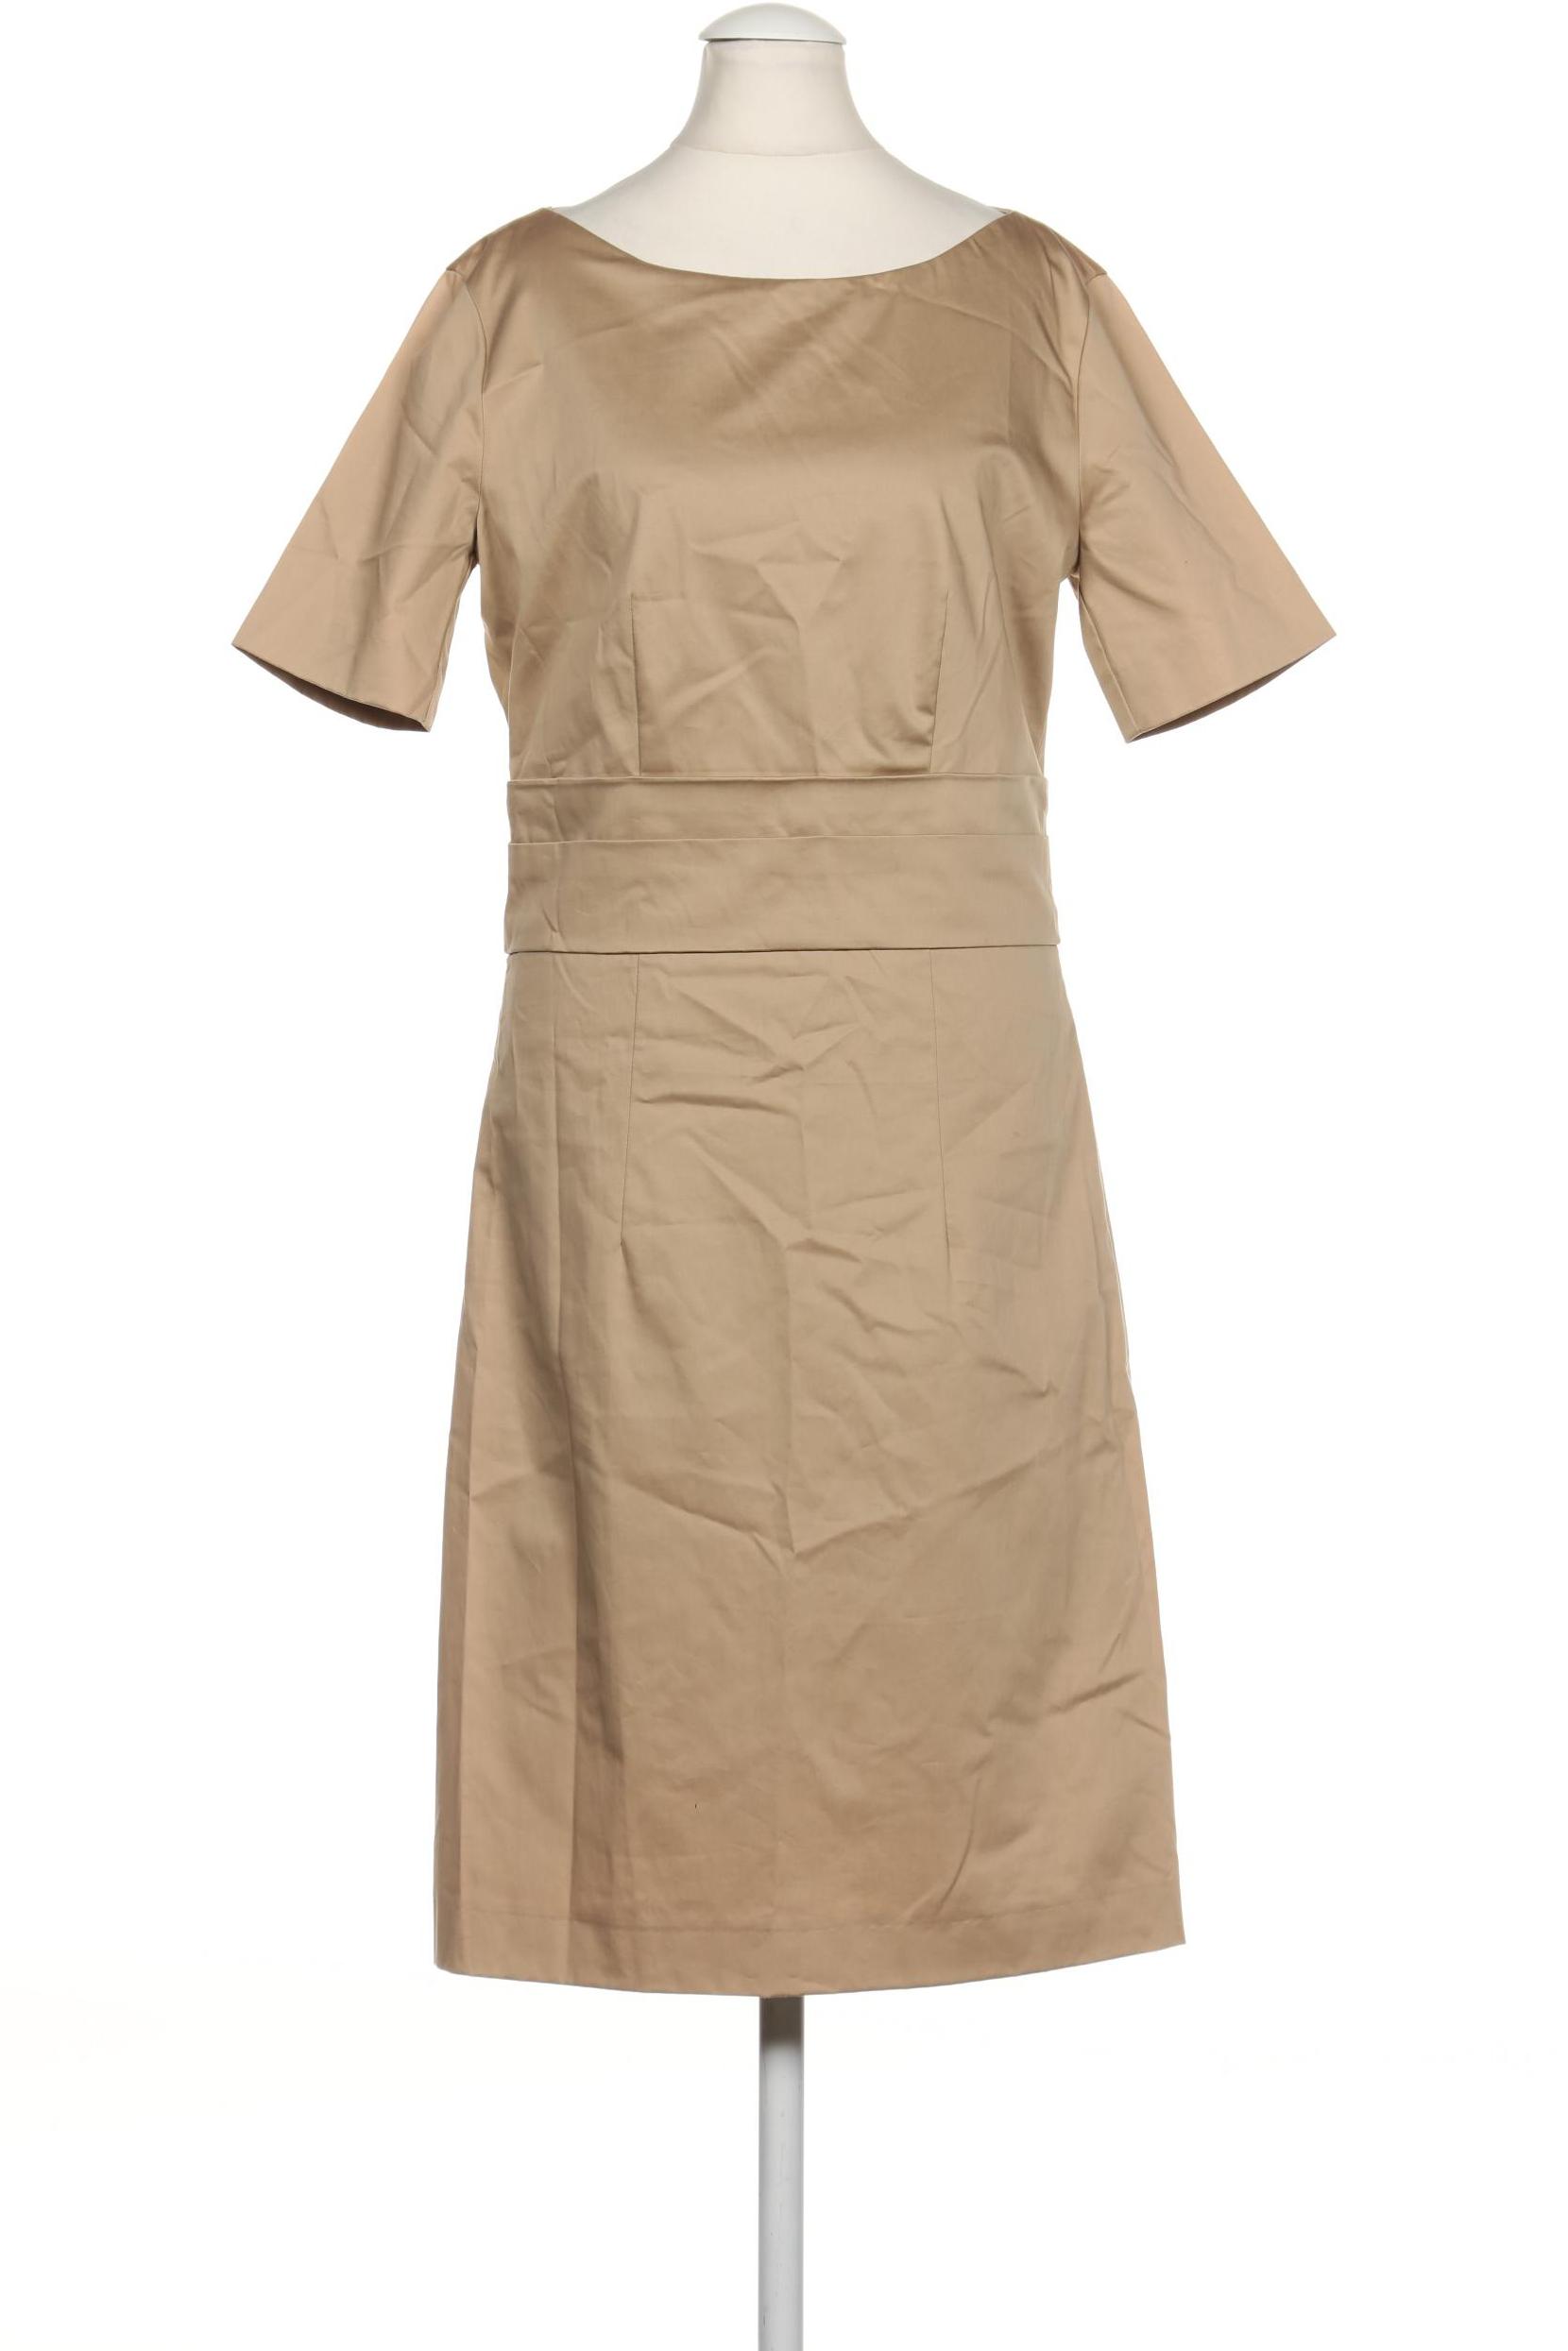 Rene Lezard Damen Kleid, beige, Gr. 36 von RENE LEZARD